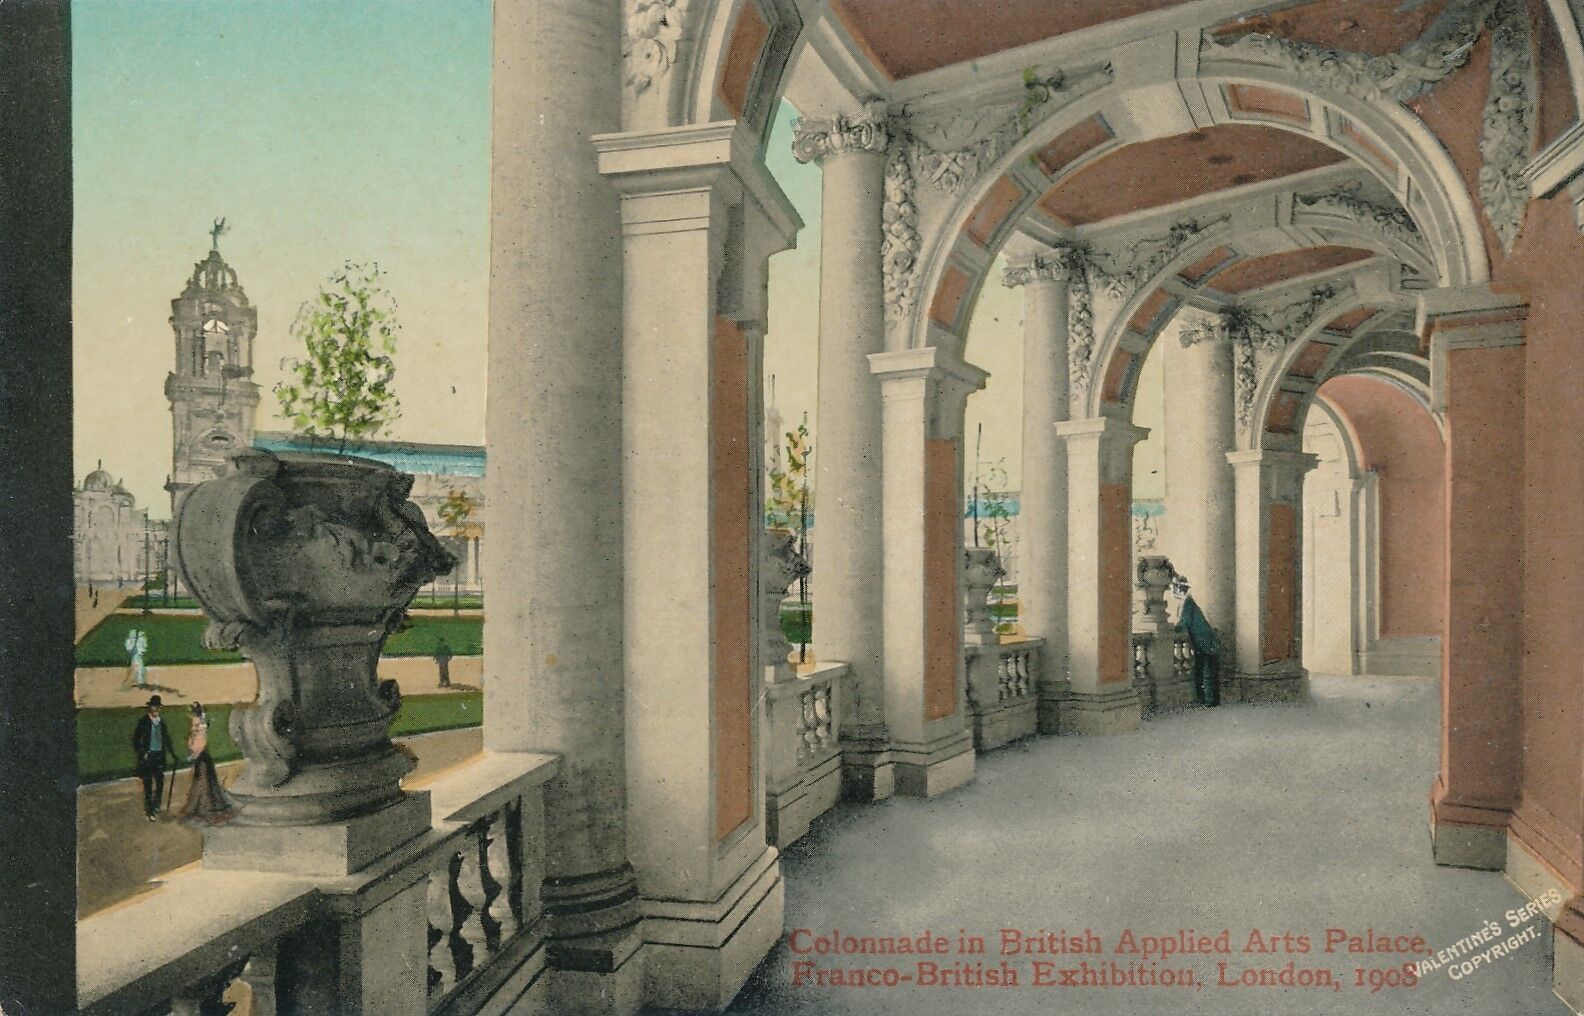 1908 London Franco-British Exhibition British Applied Arts Palace Colonnade